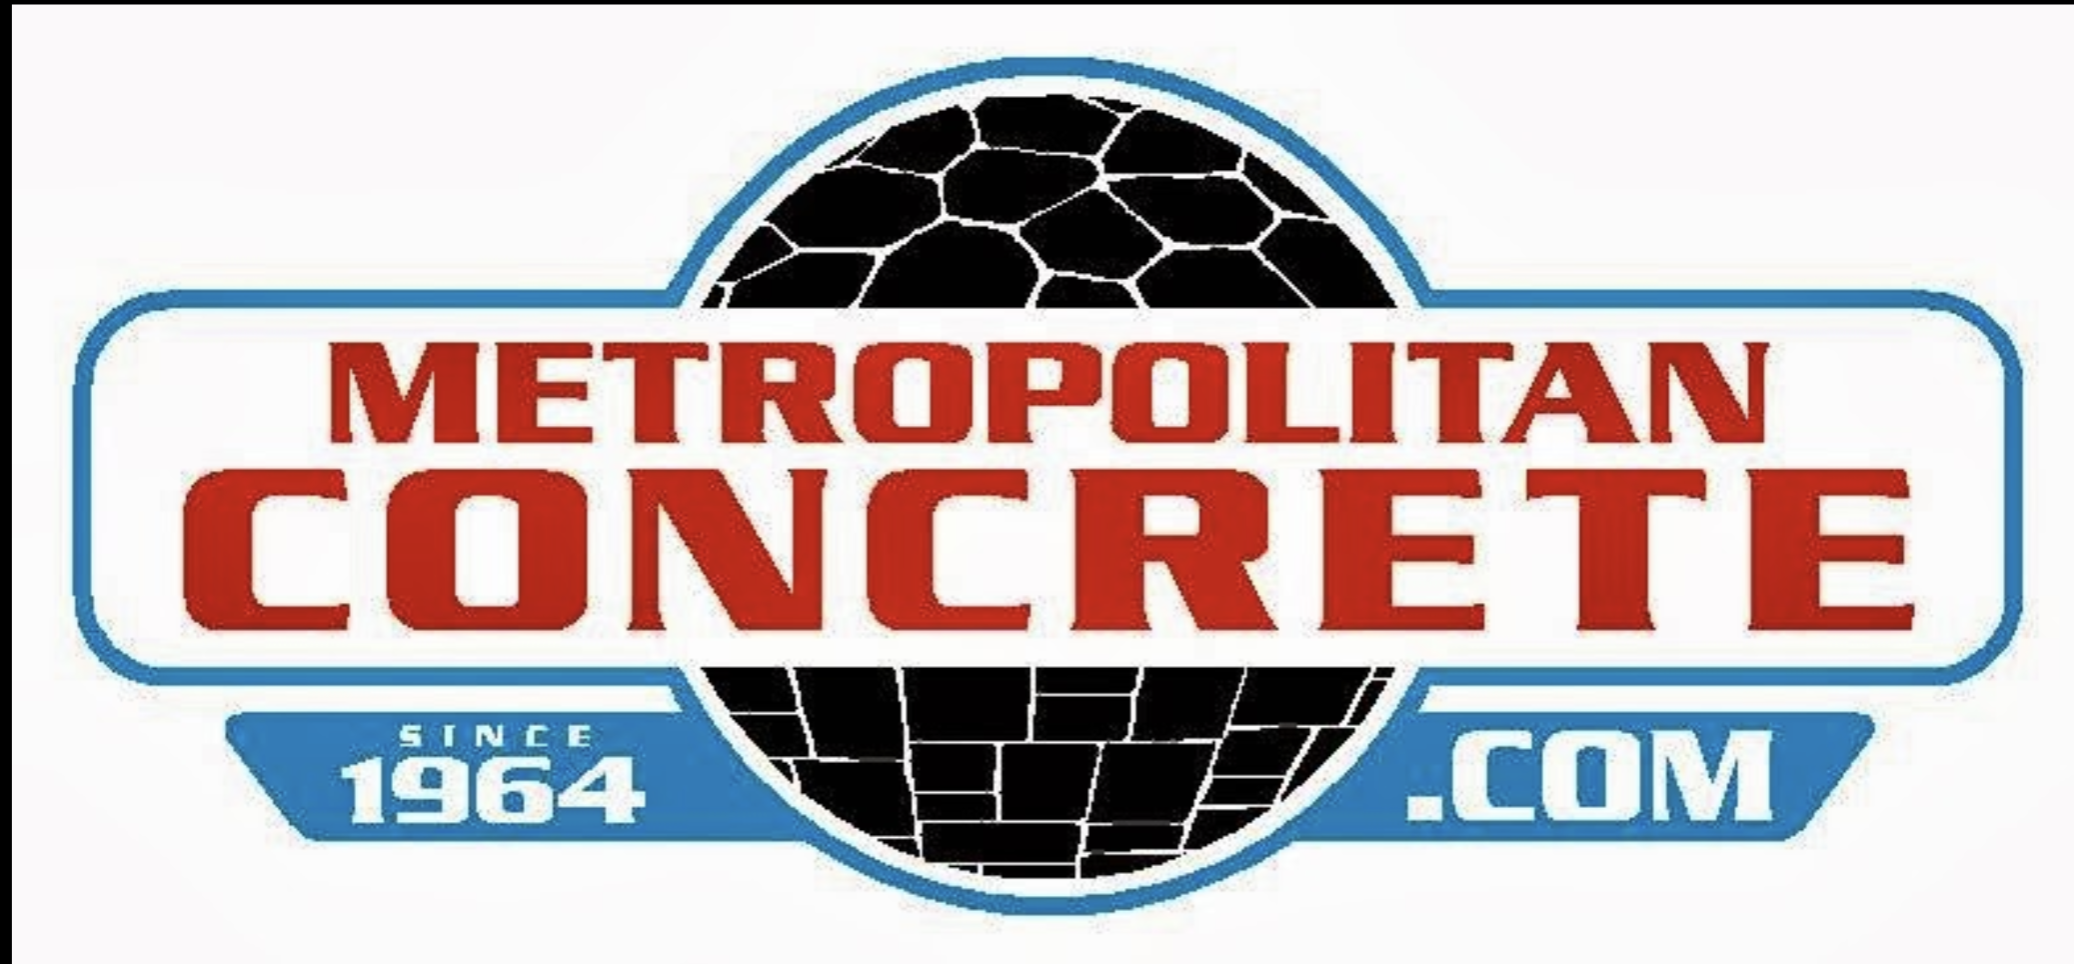 Metropolitan Concrete Corporation Photo